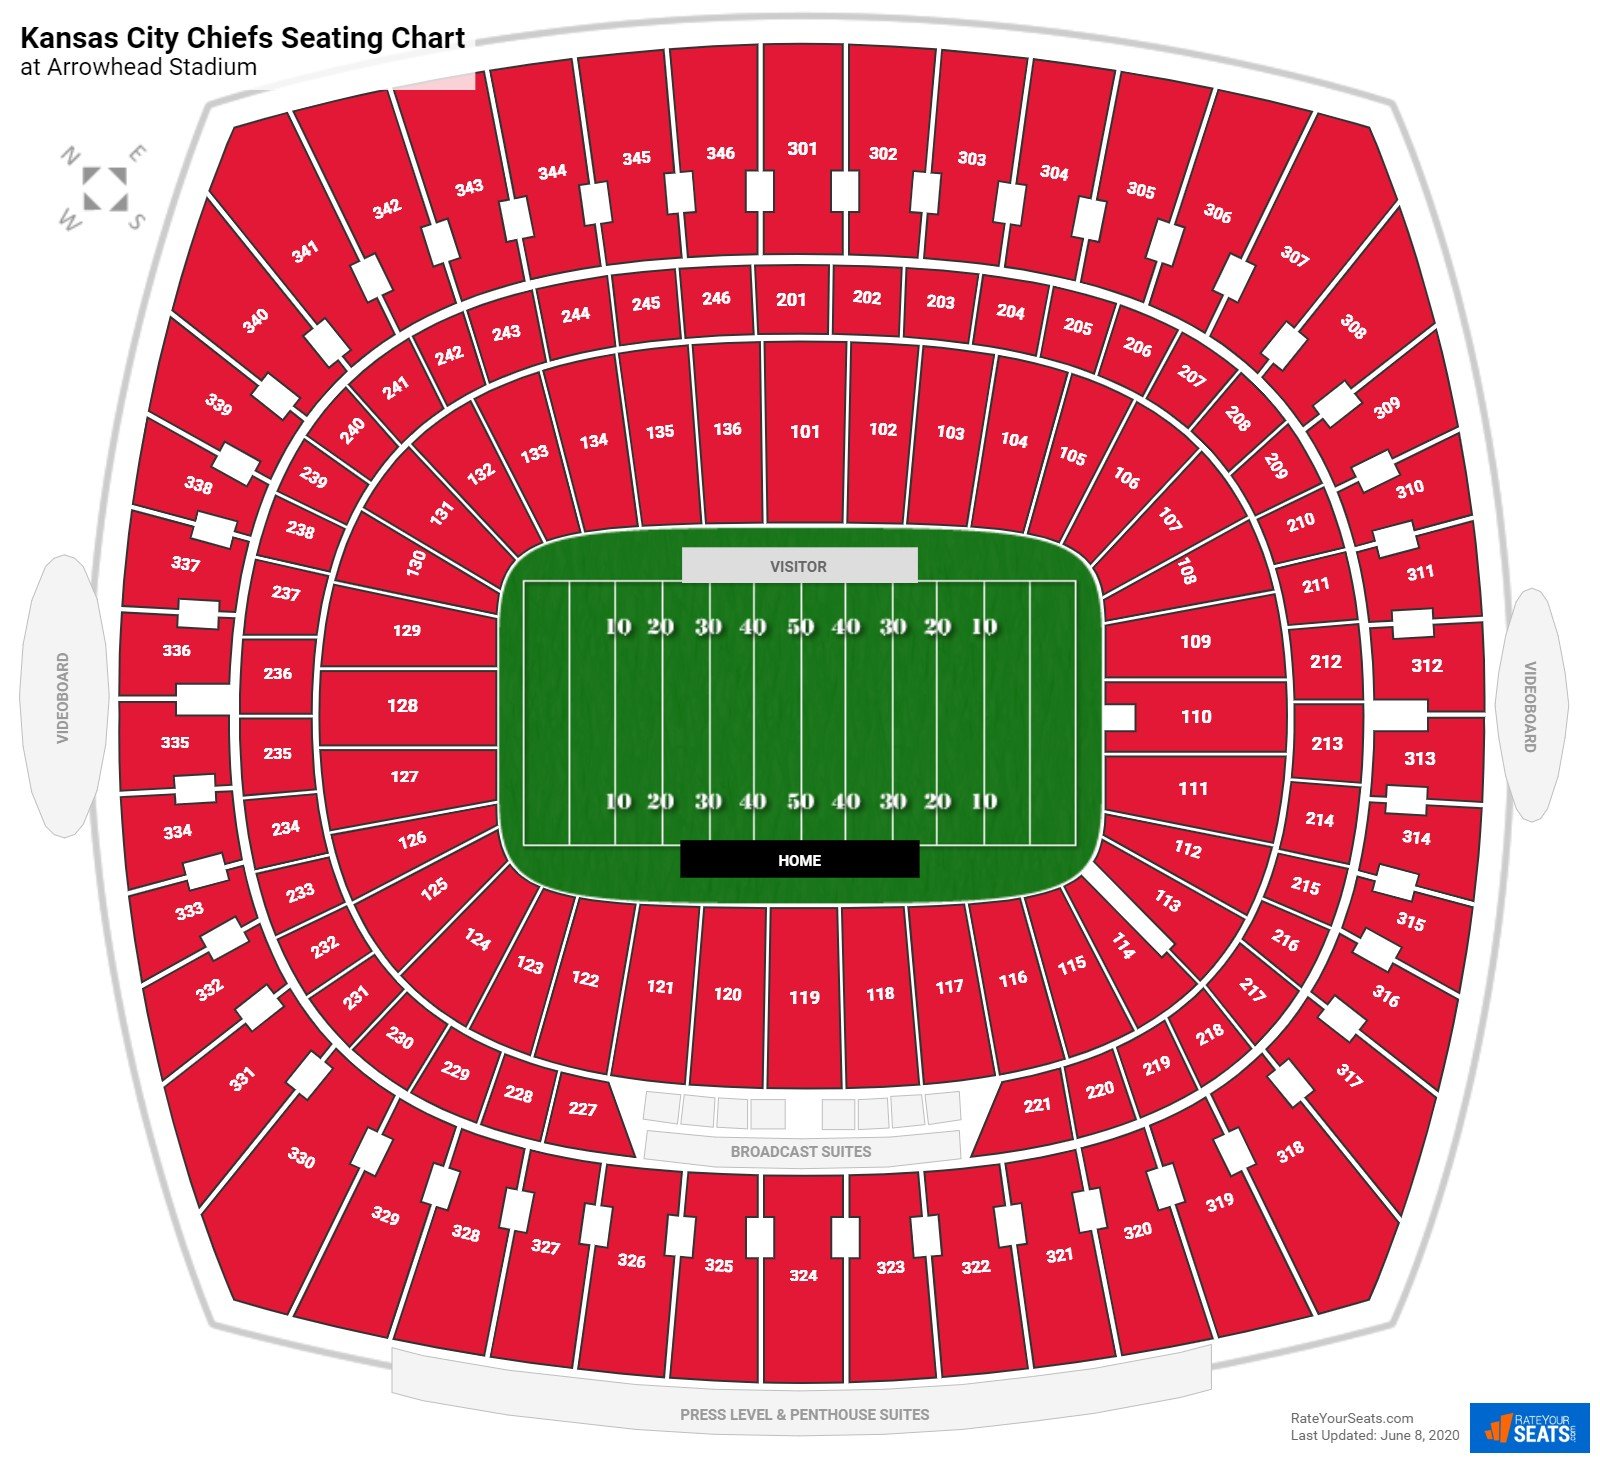 Arrowhead Stadium Section 122 - RateYourSeats.com